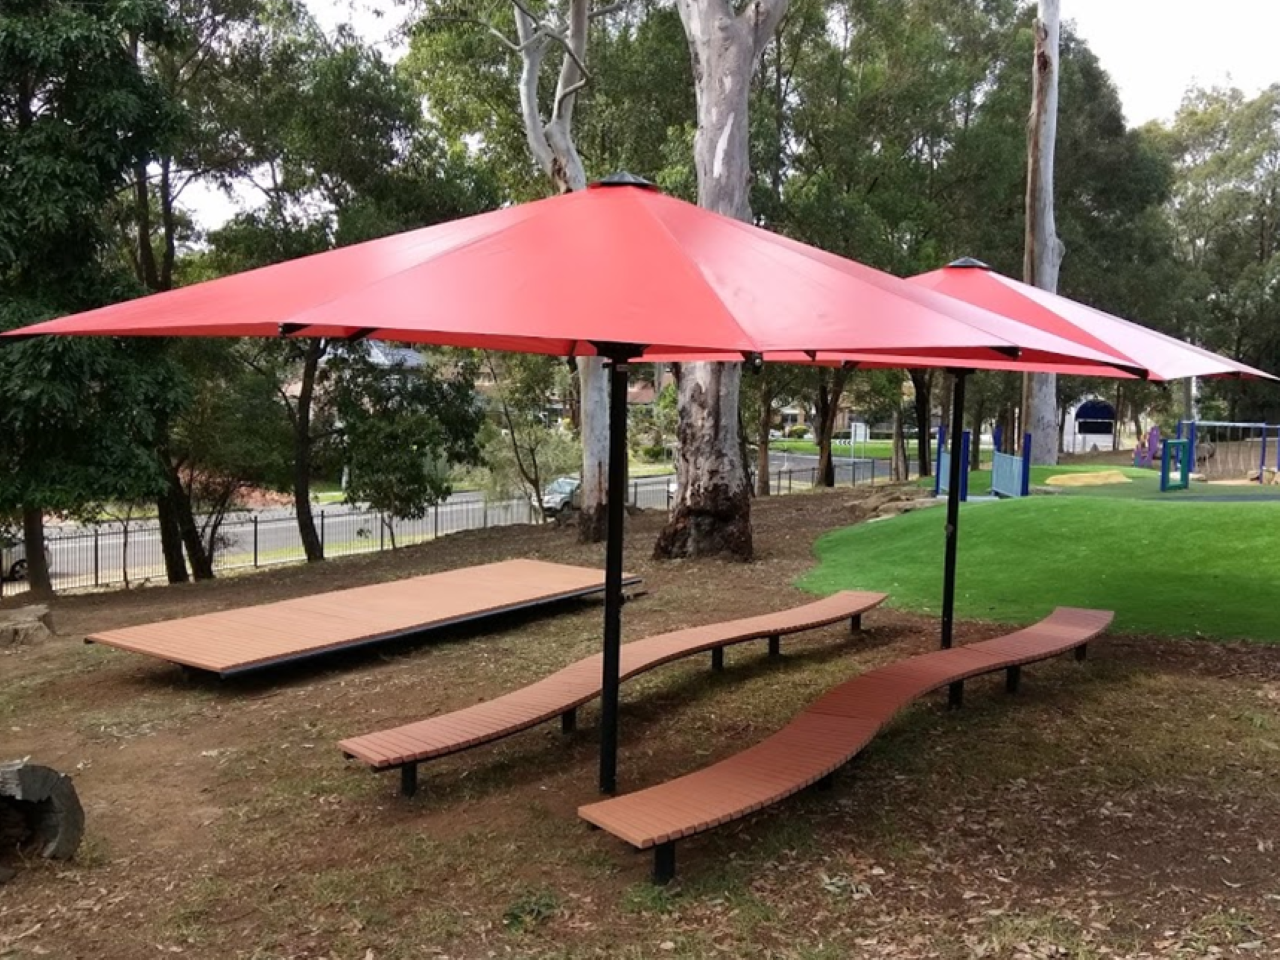 School Outdoor furniture & Umbrellas installed as an outdoor classroom